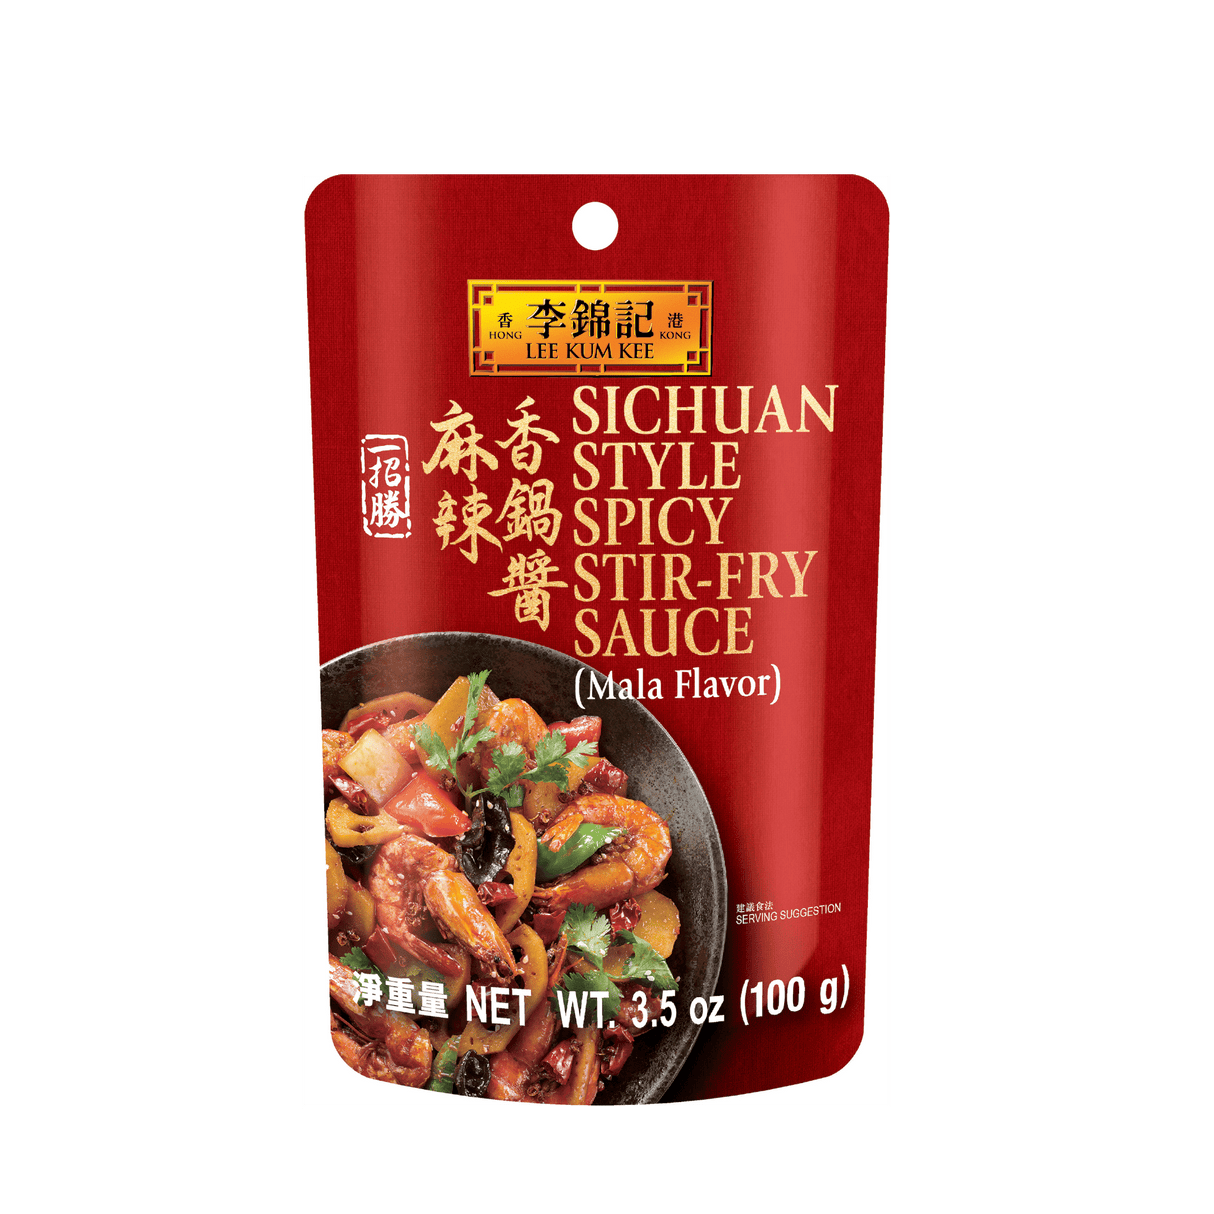 Lee Kum Kee Sichuan Style Spicy Stir-Fry Sauce (Mala Flavor)